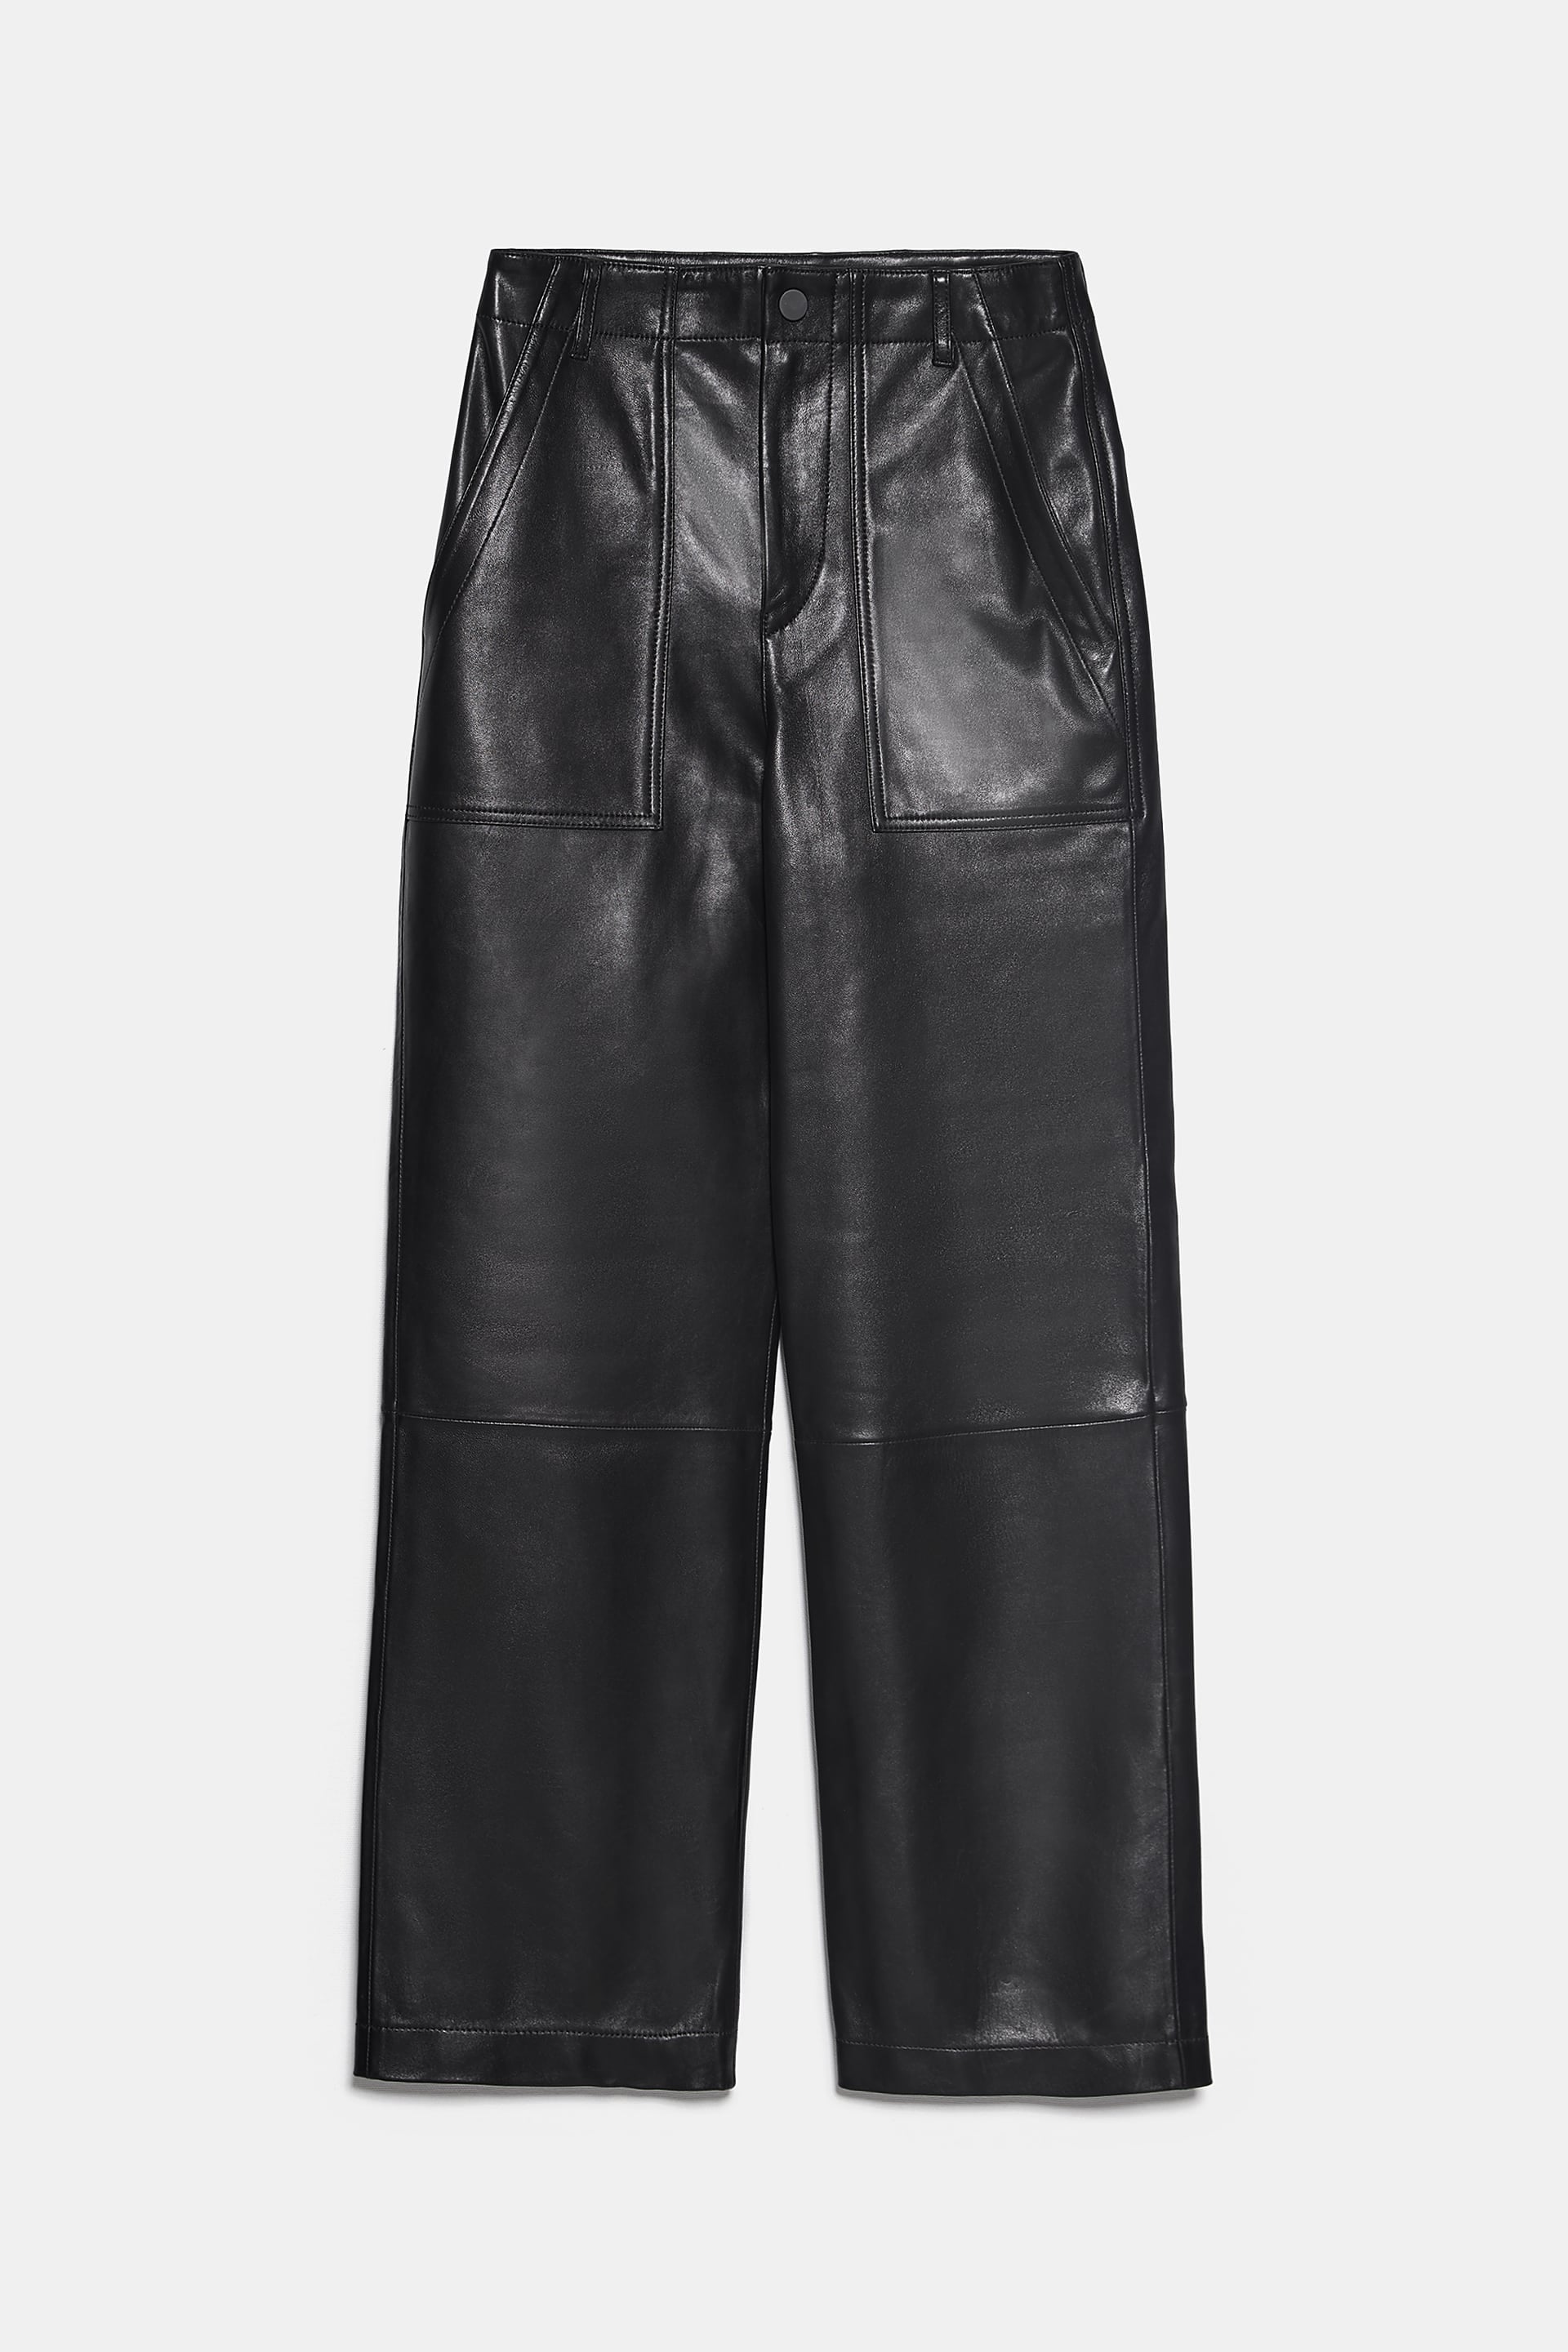 zara black leather pants